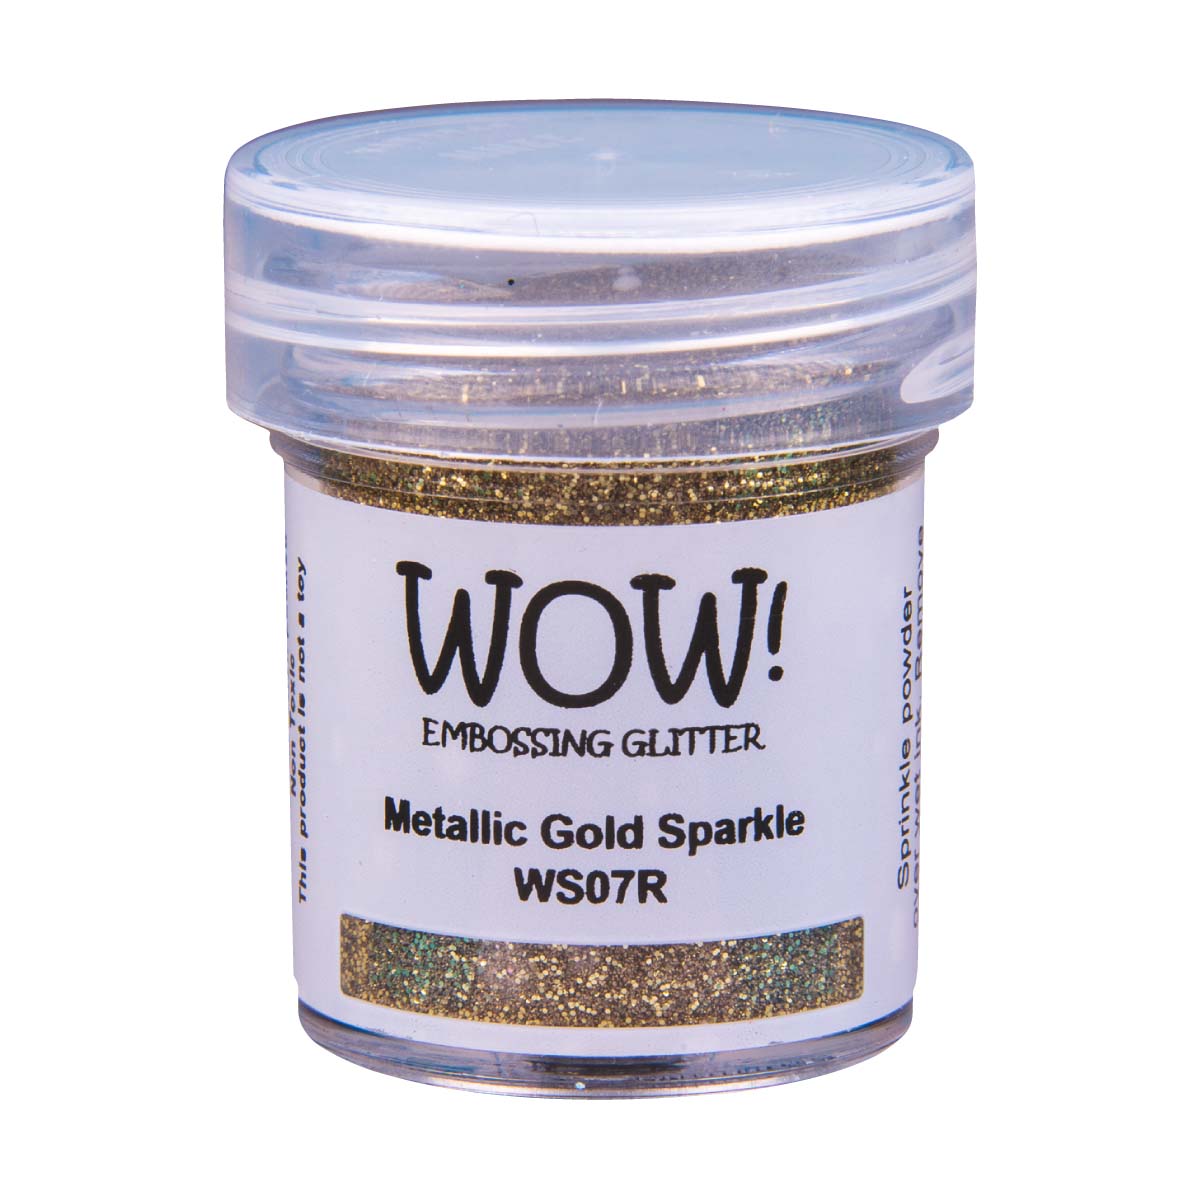 WOW! Embossing Glitter, 15ml Jar - Metallic Gold Sparkle